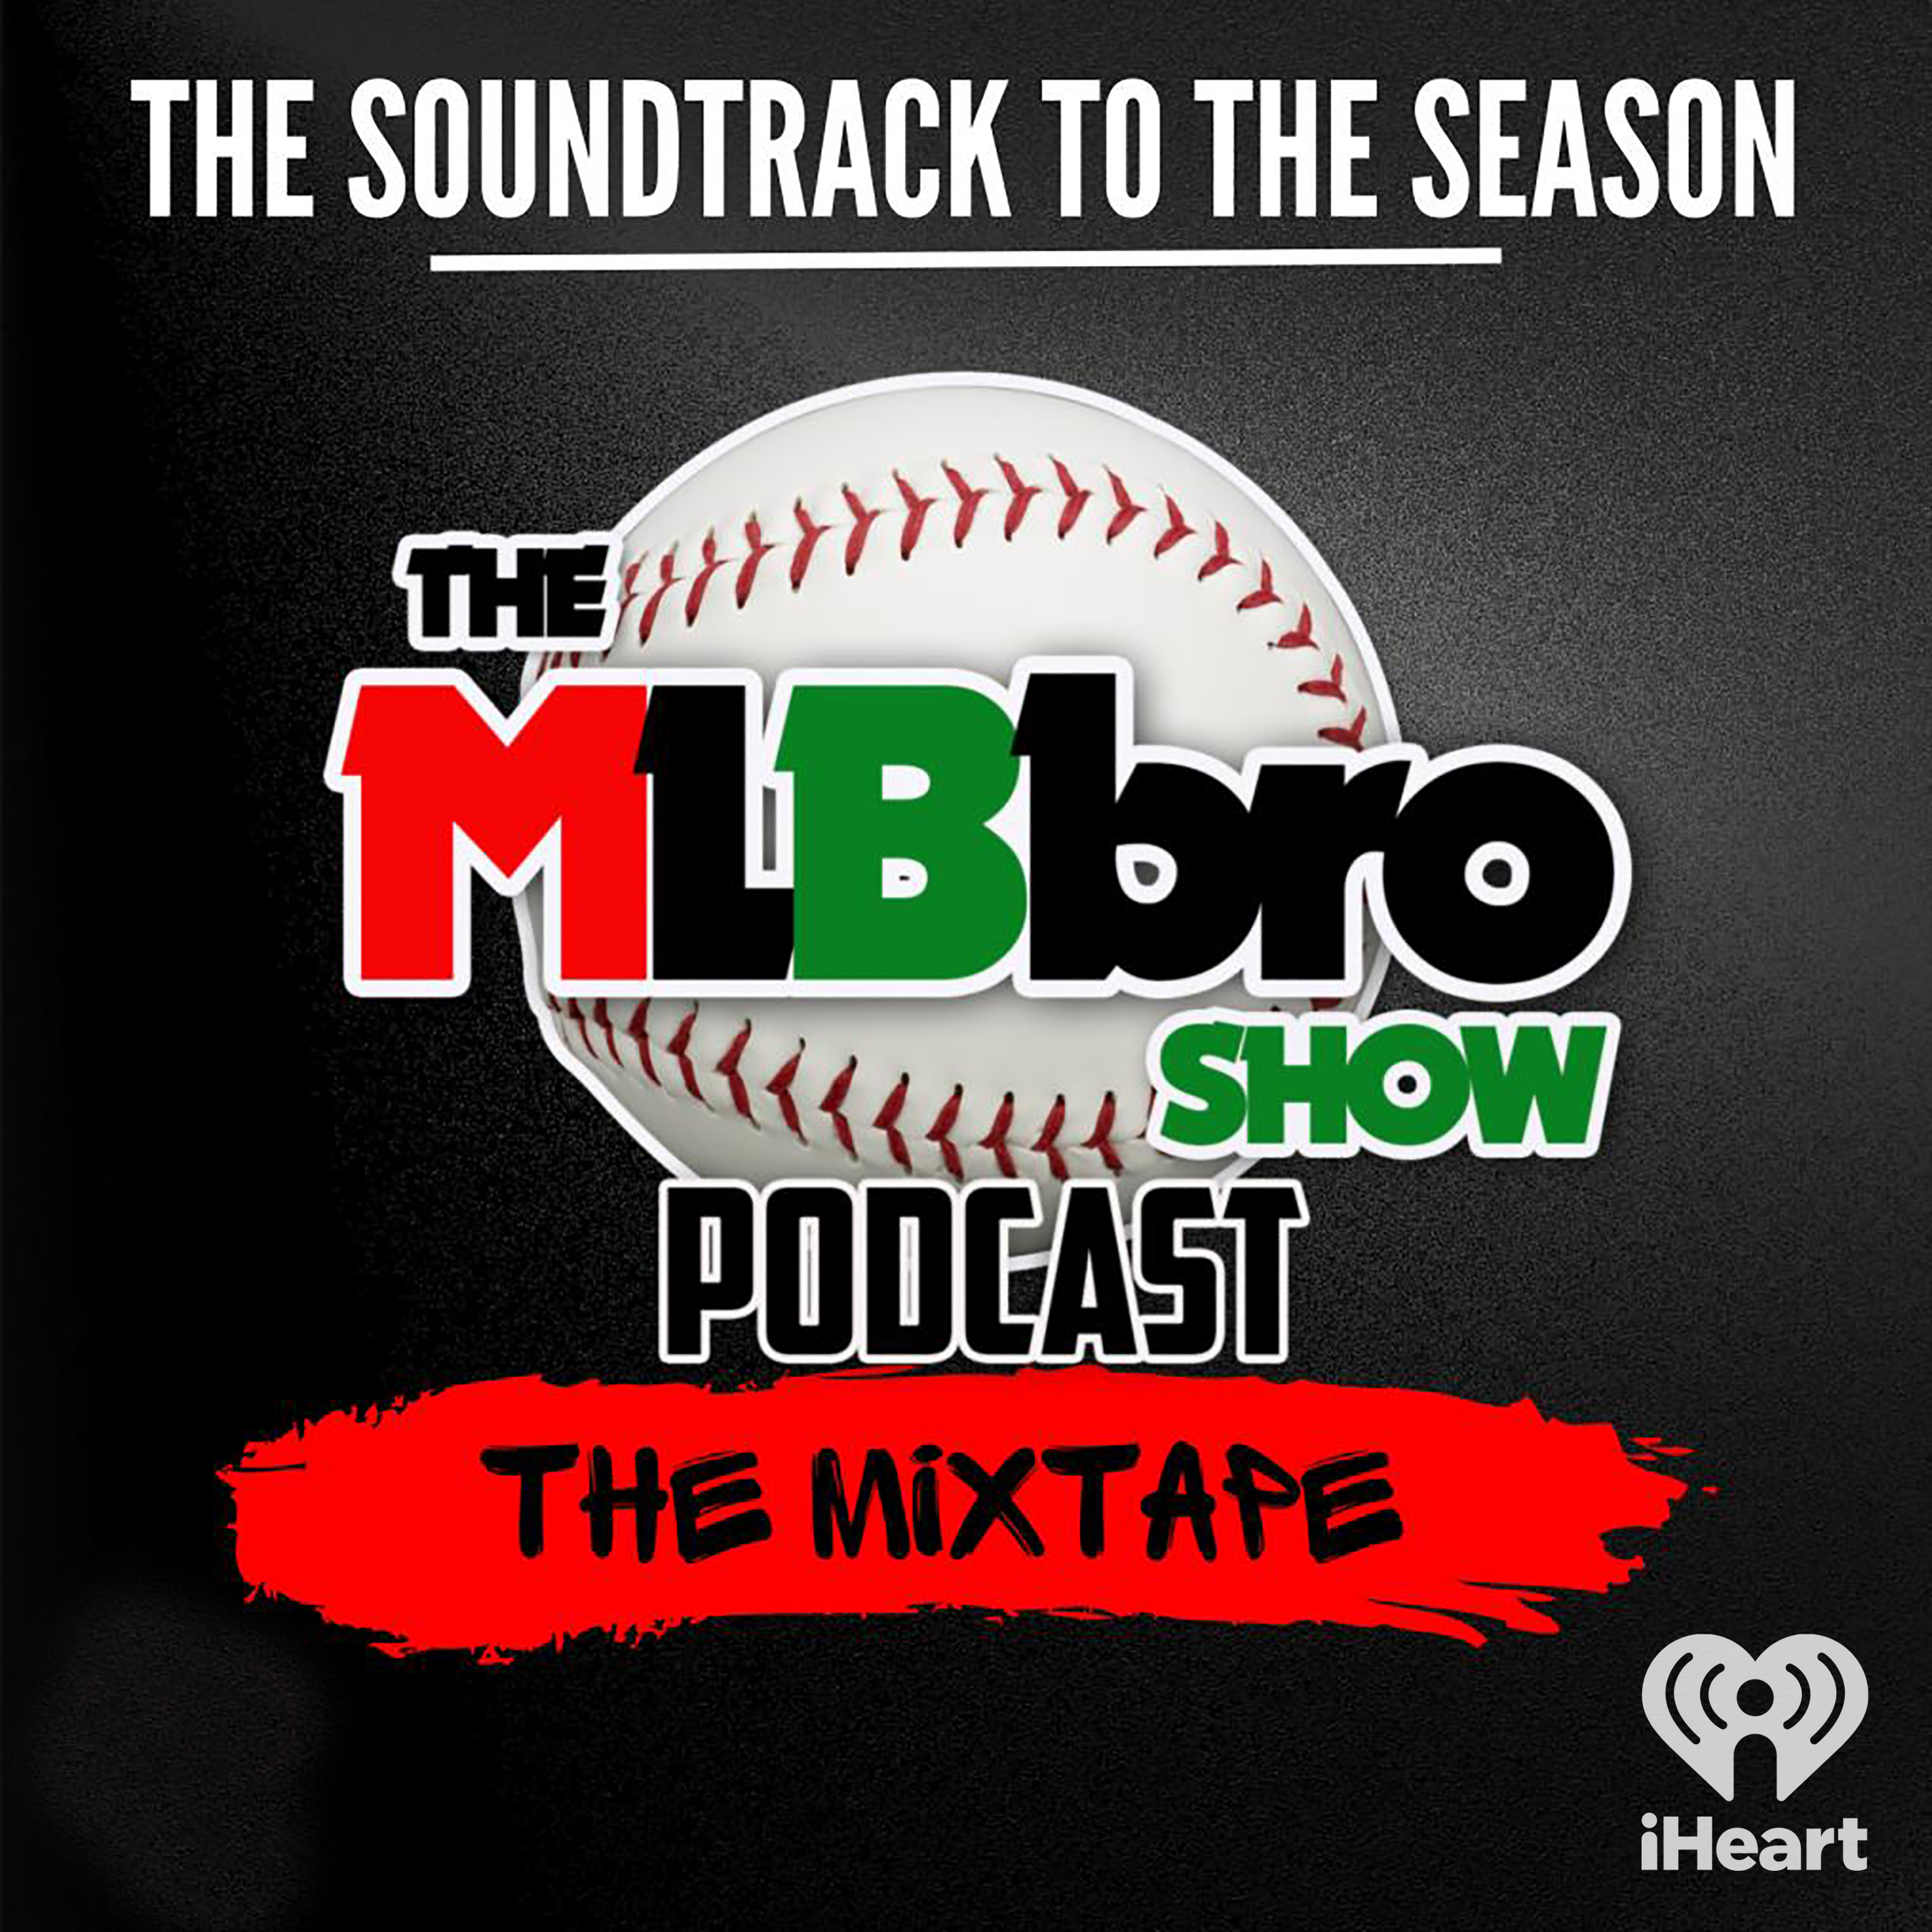 MLBbro Show Podcast The Mixtape Vol 4 Episode 4